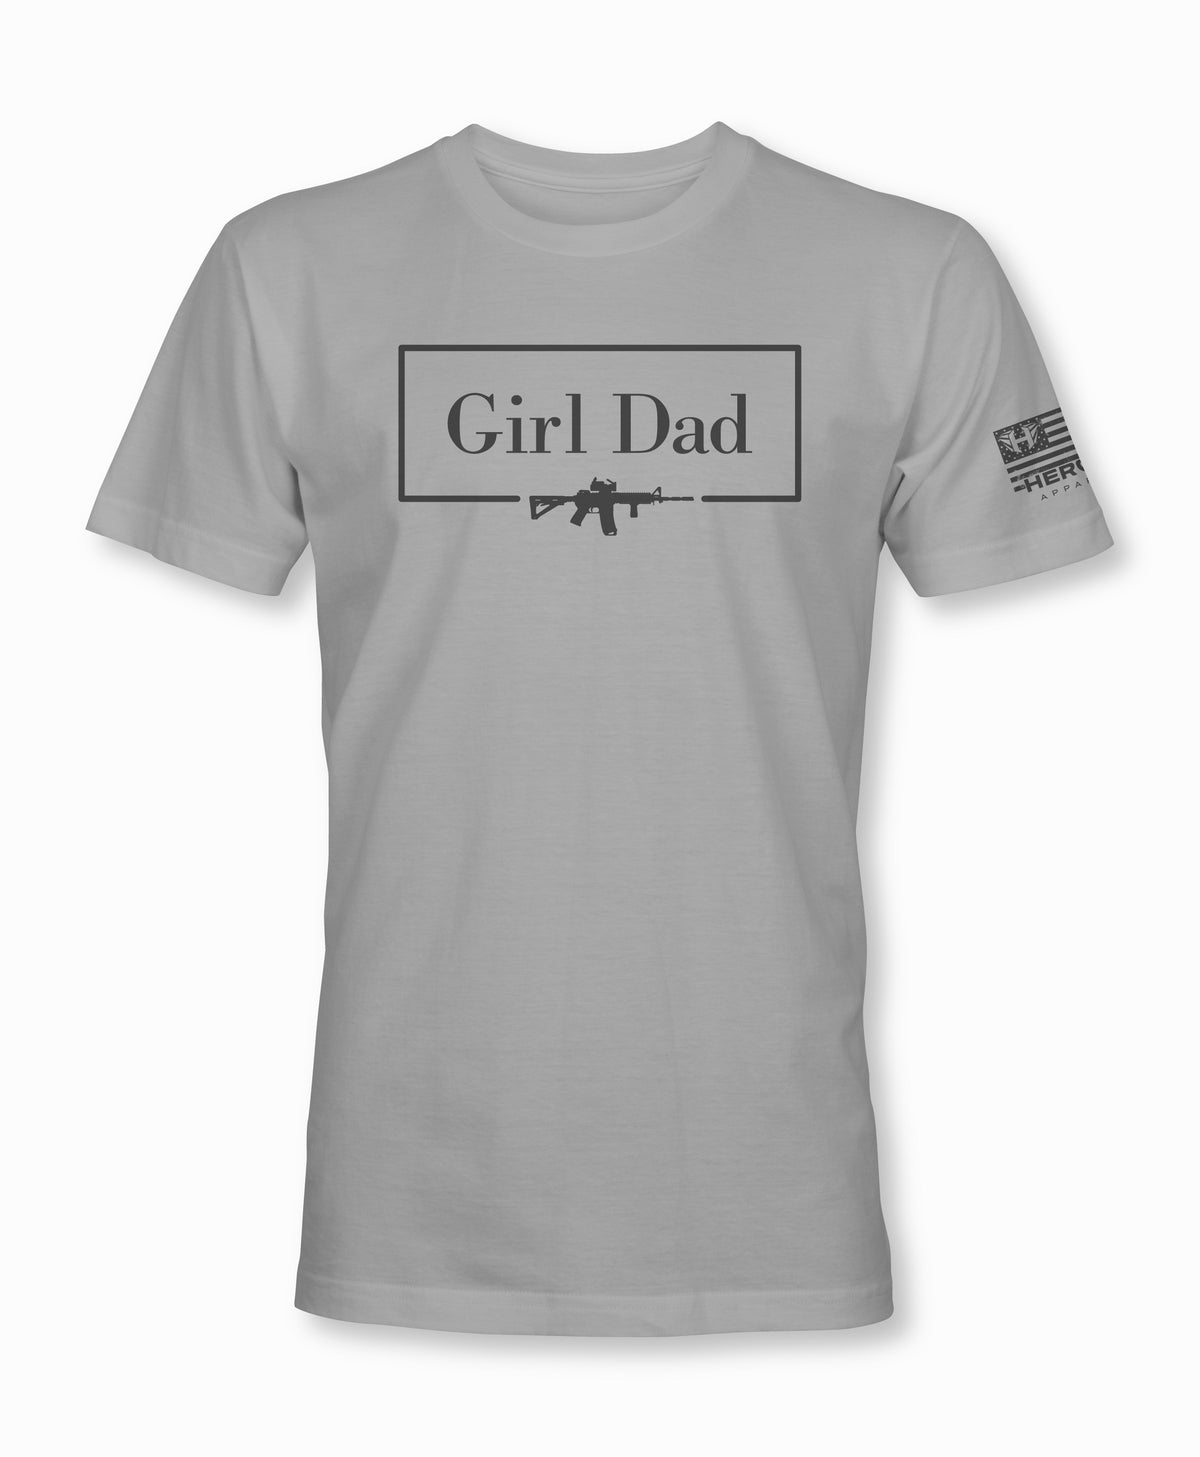 Girl Dad 2.0 Night Ops